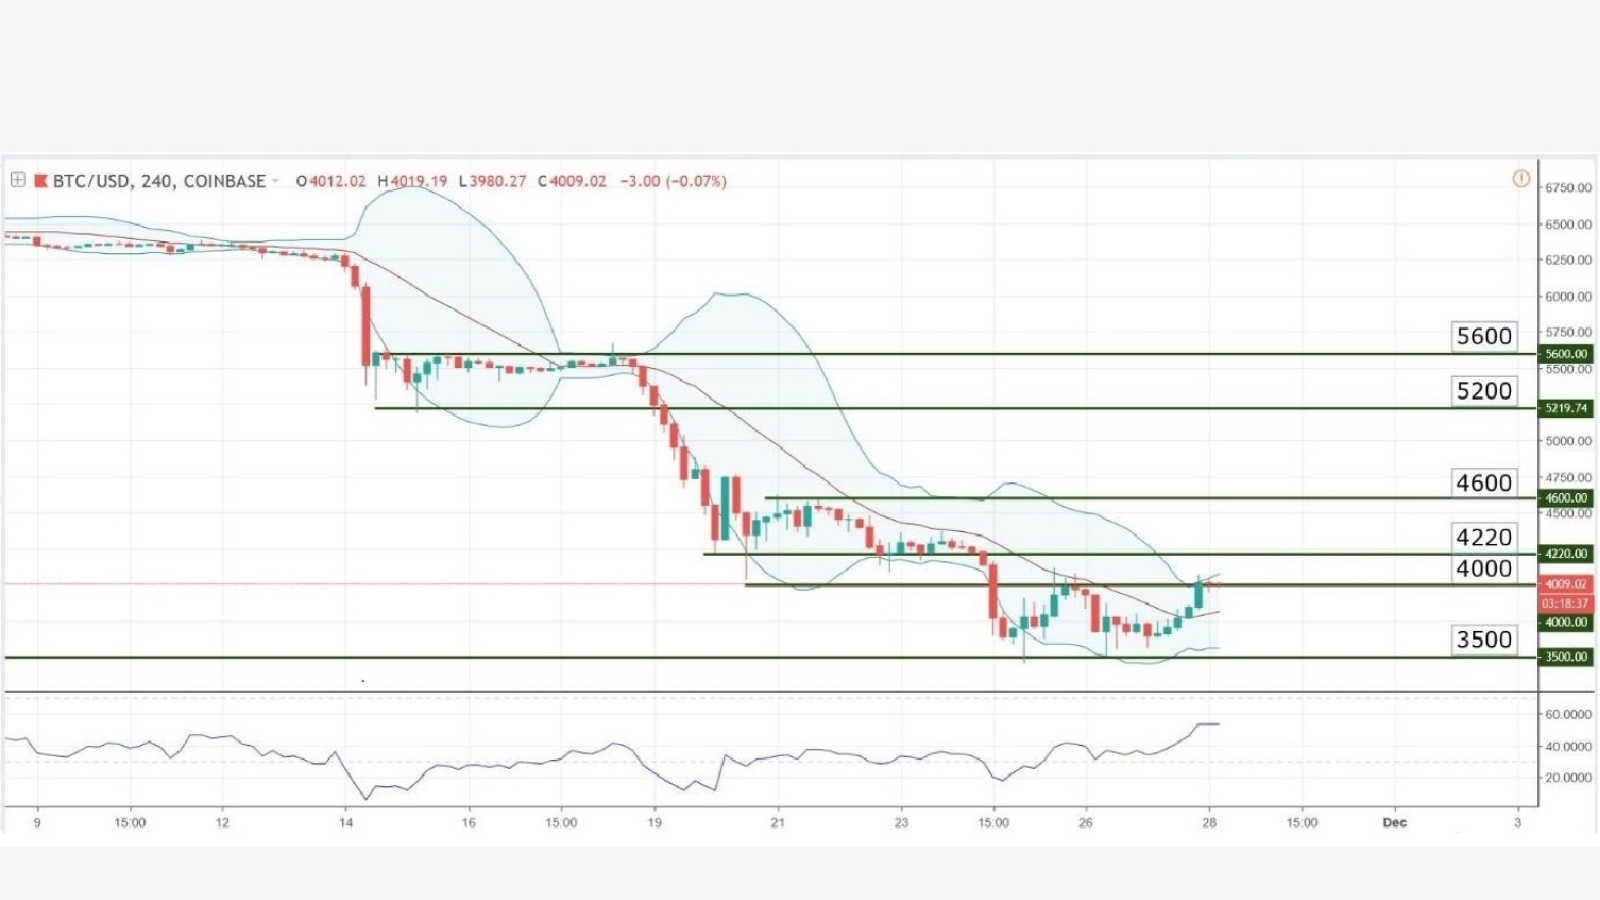 Chart Analysis – BTC/USD